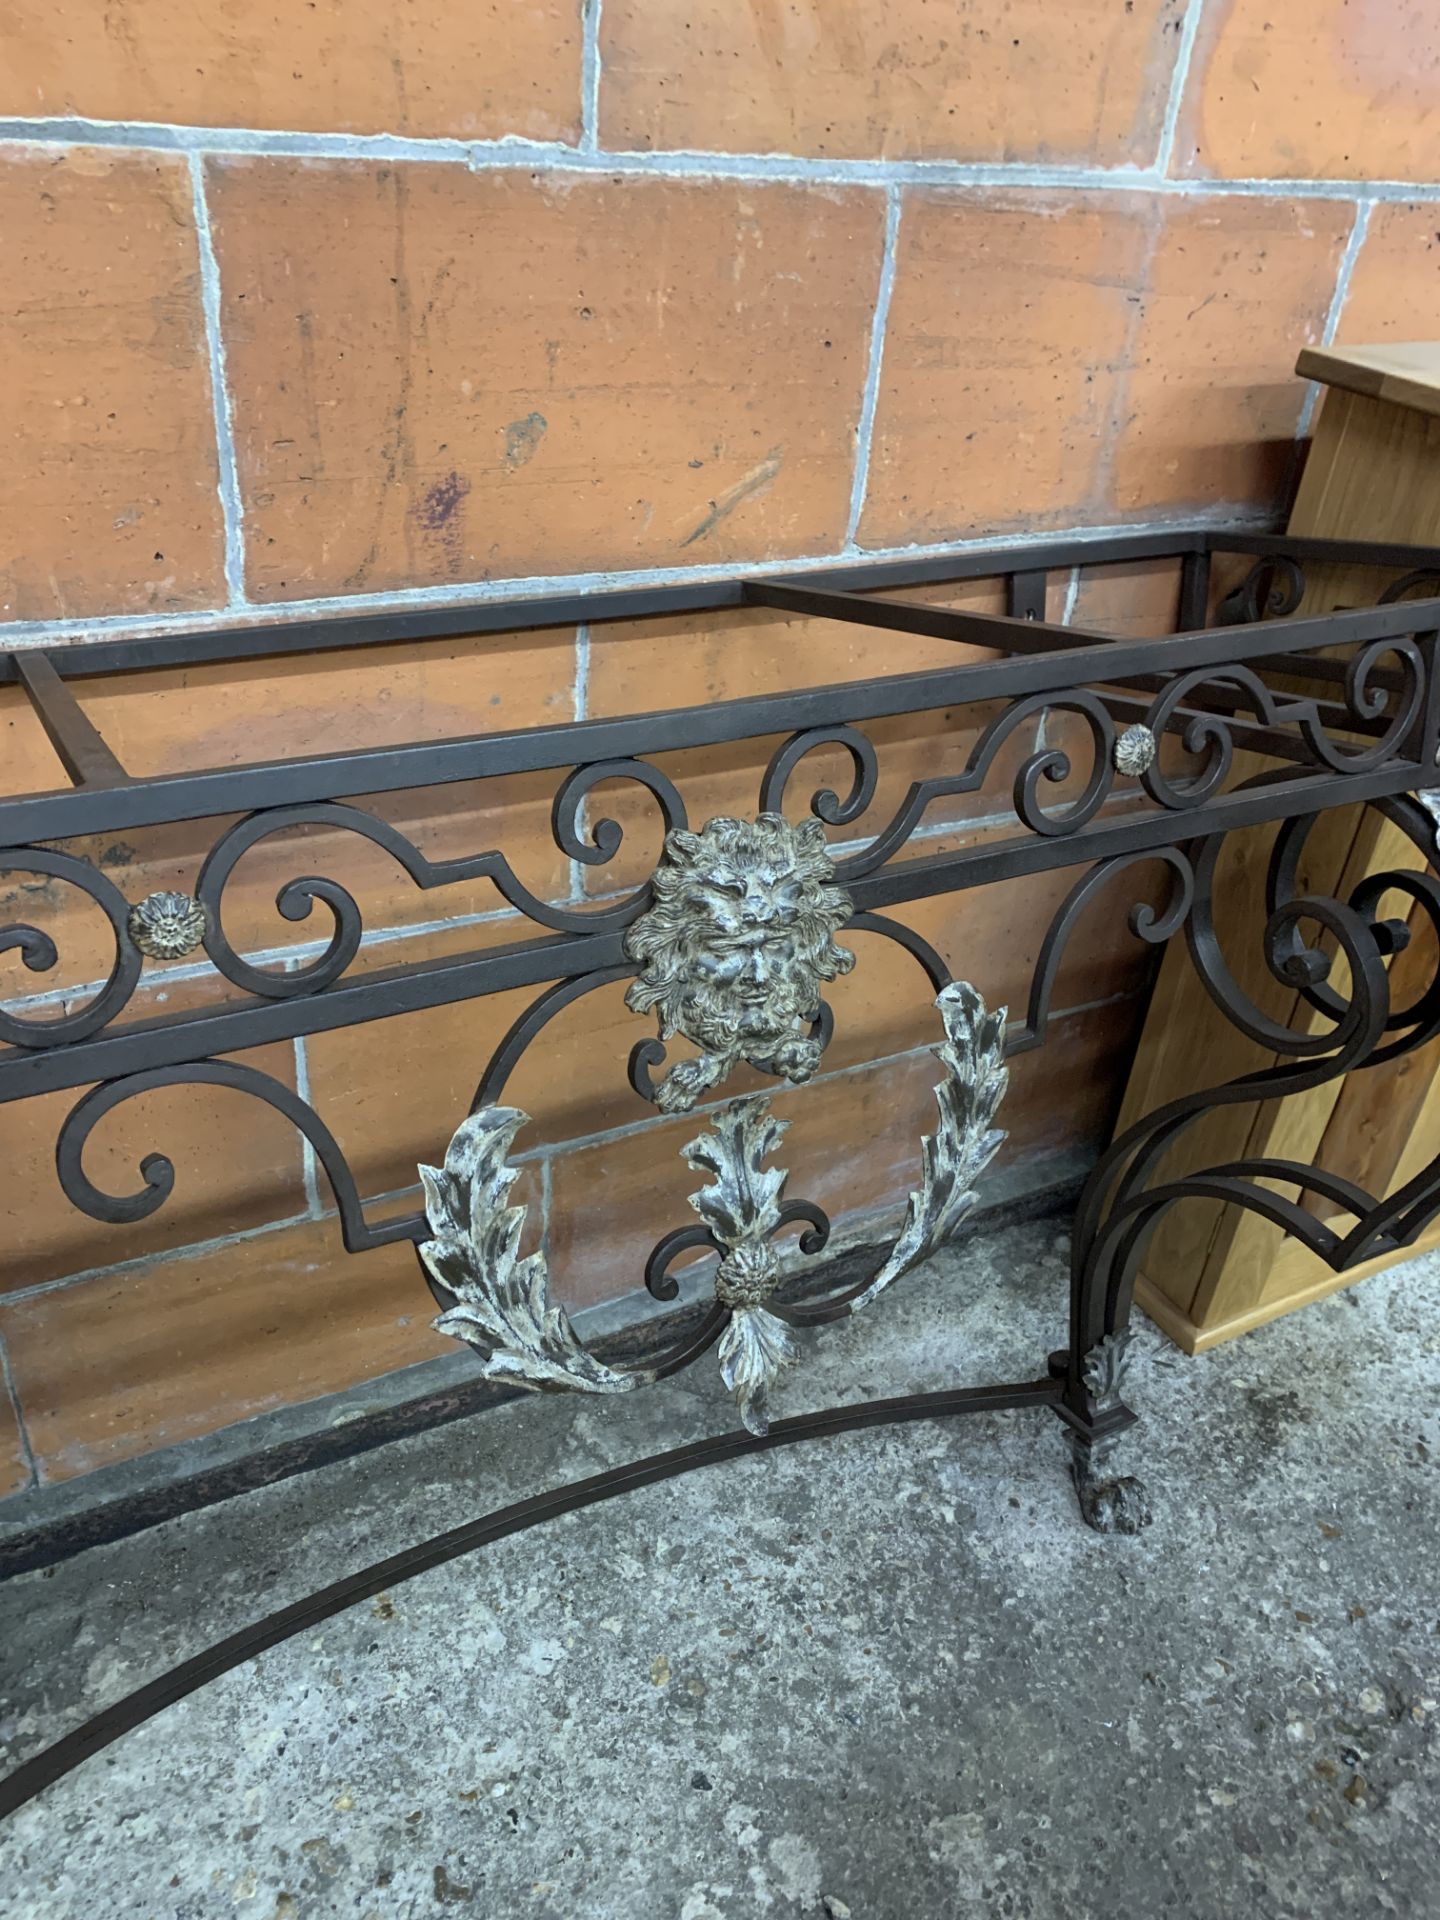 Decorative wrought iron side table base - Image 2 of 4